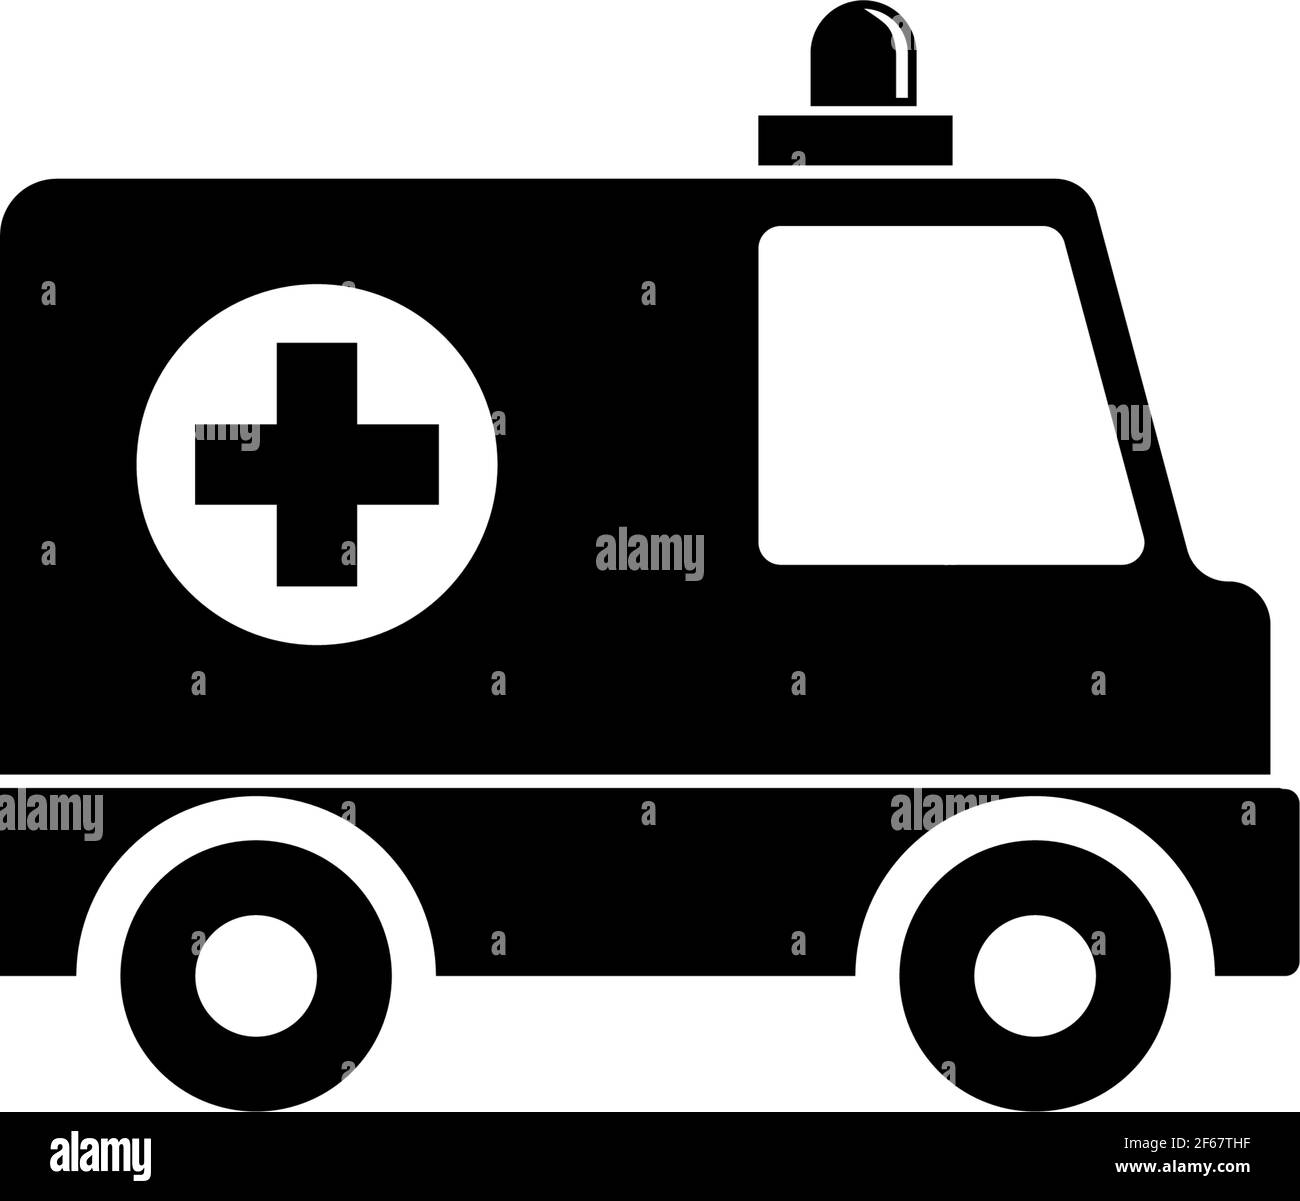 Medical Fast Response Ambulance Car. Flat Vector Icon illustration. Simple black symbol on white background. Medical Fast Response Ambulance Car sign Stock Vector